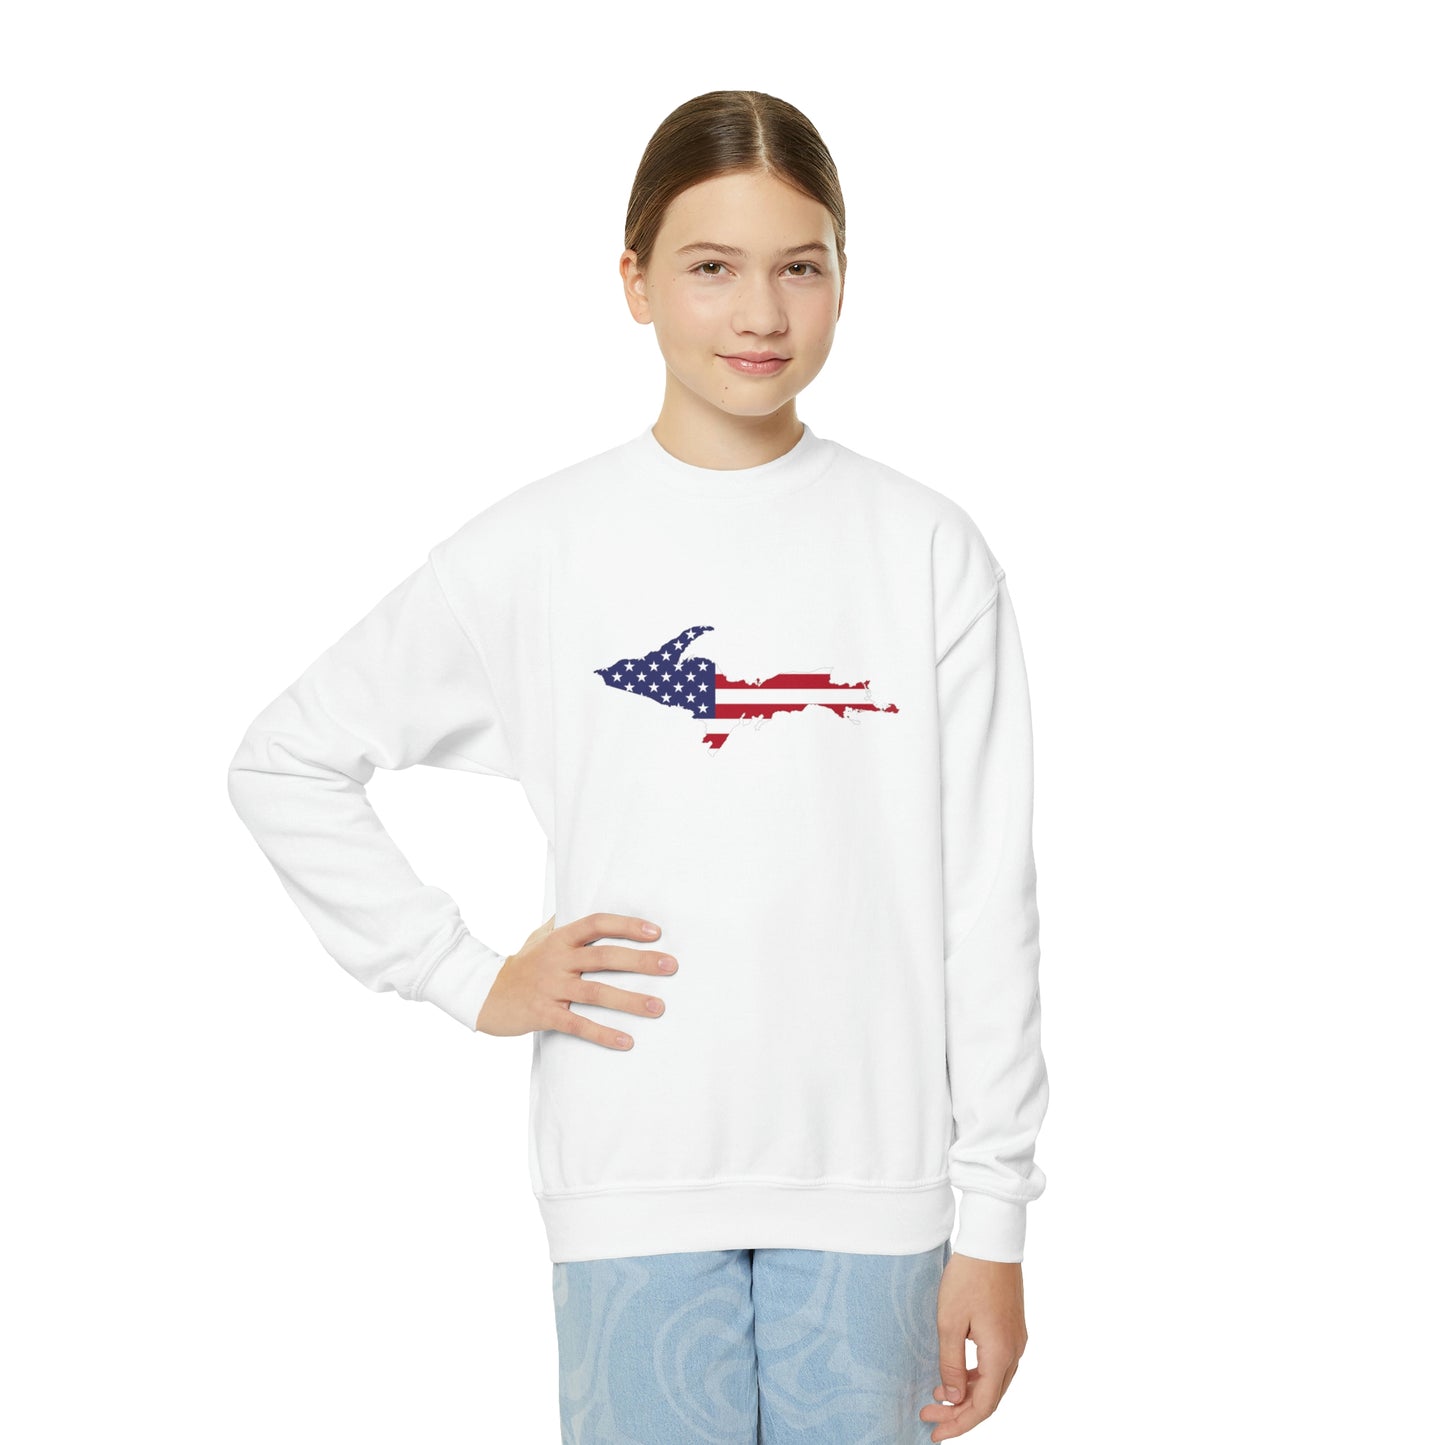 Michigan Upper Peninsula Youth Sweatshirt (w/ UP USA Flag Outline)